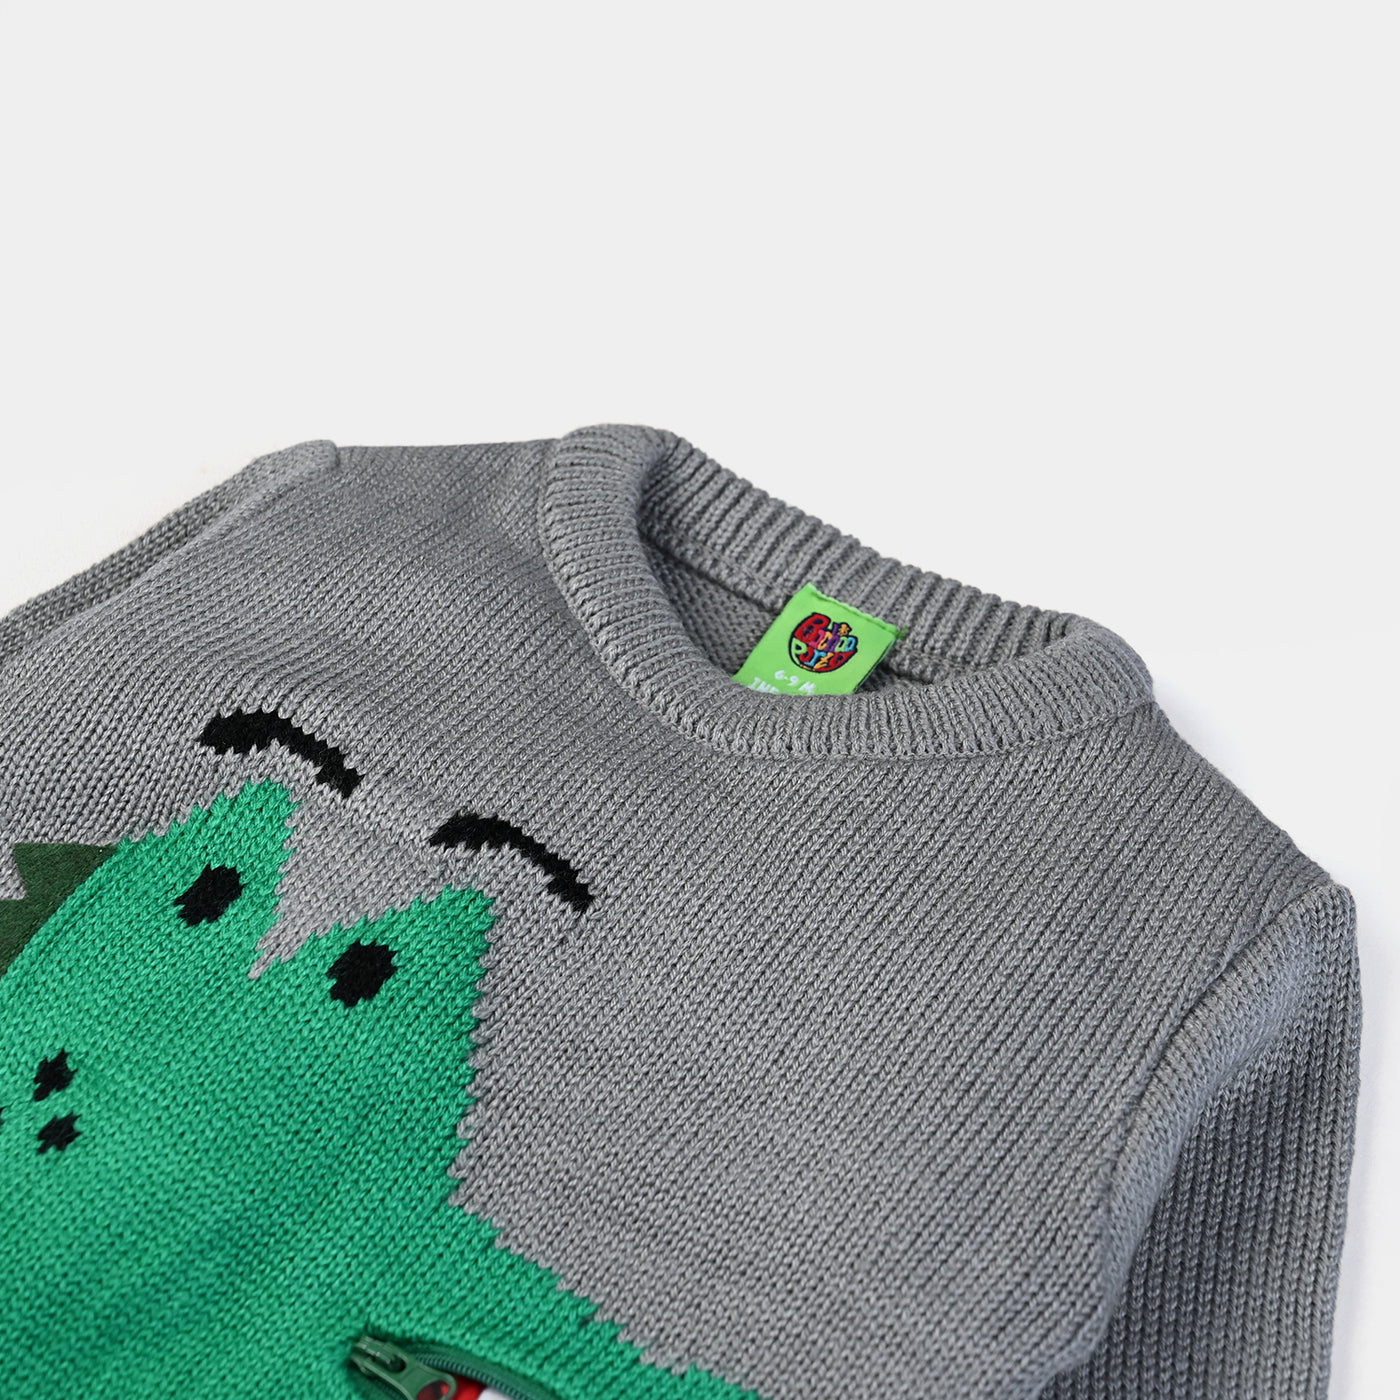 Infant Boys Acrylic Full Sleeves Sweater - GREY